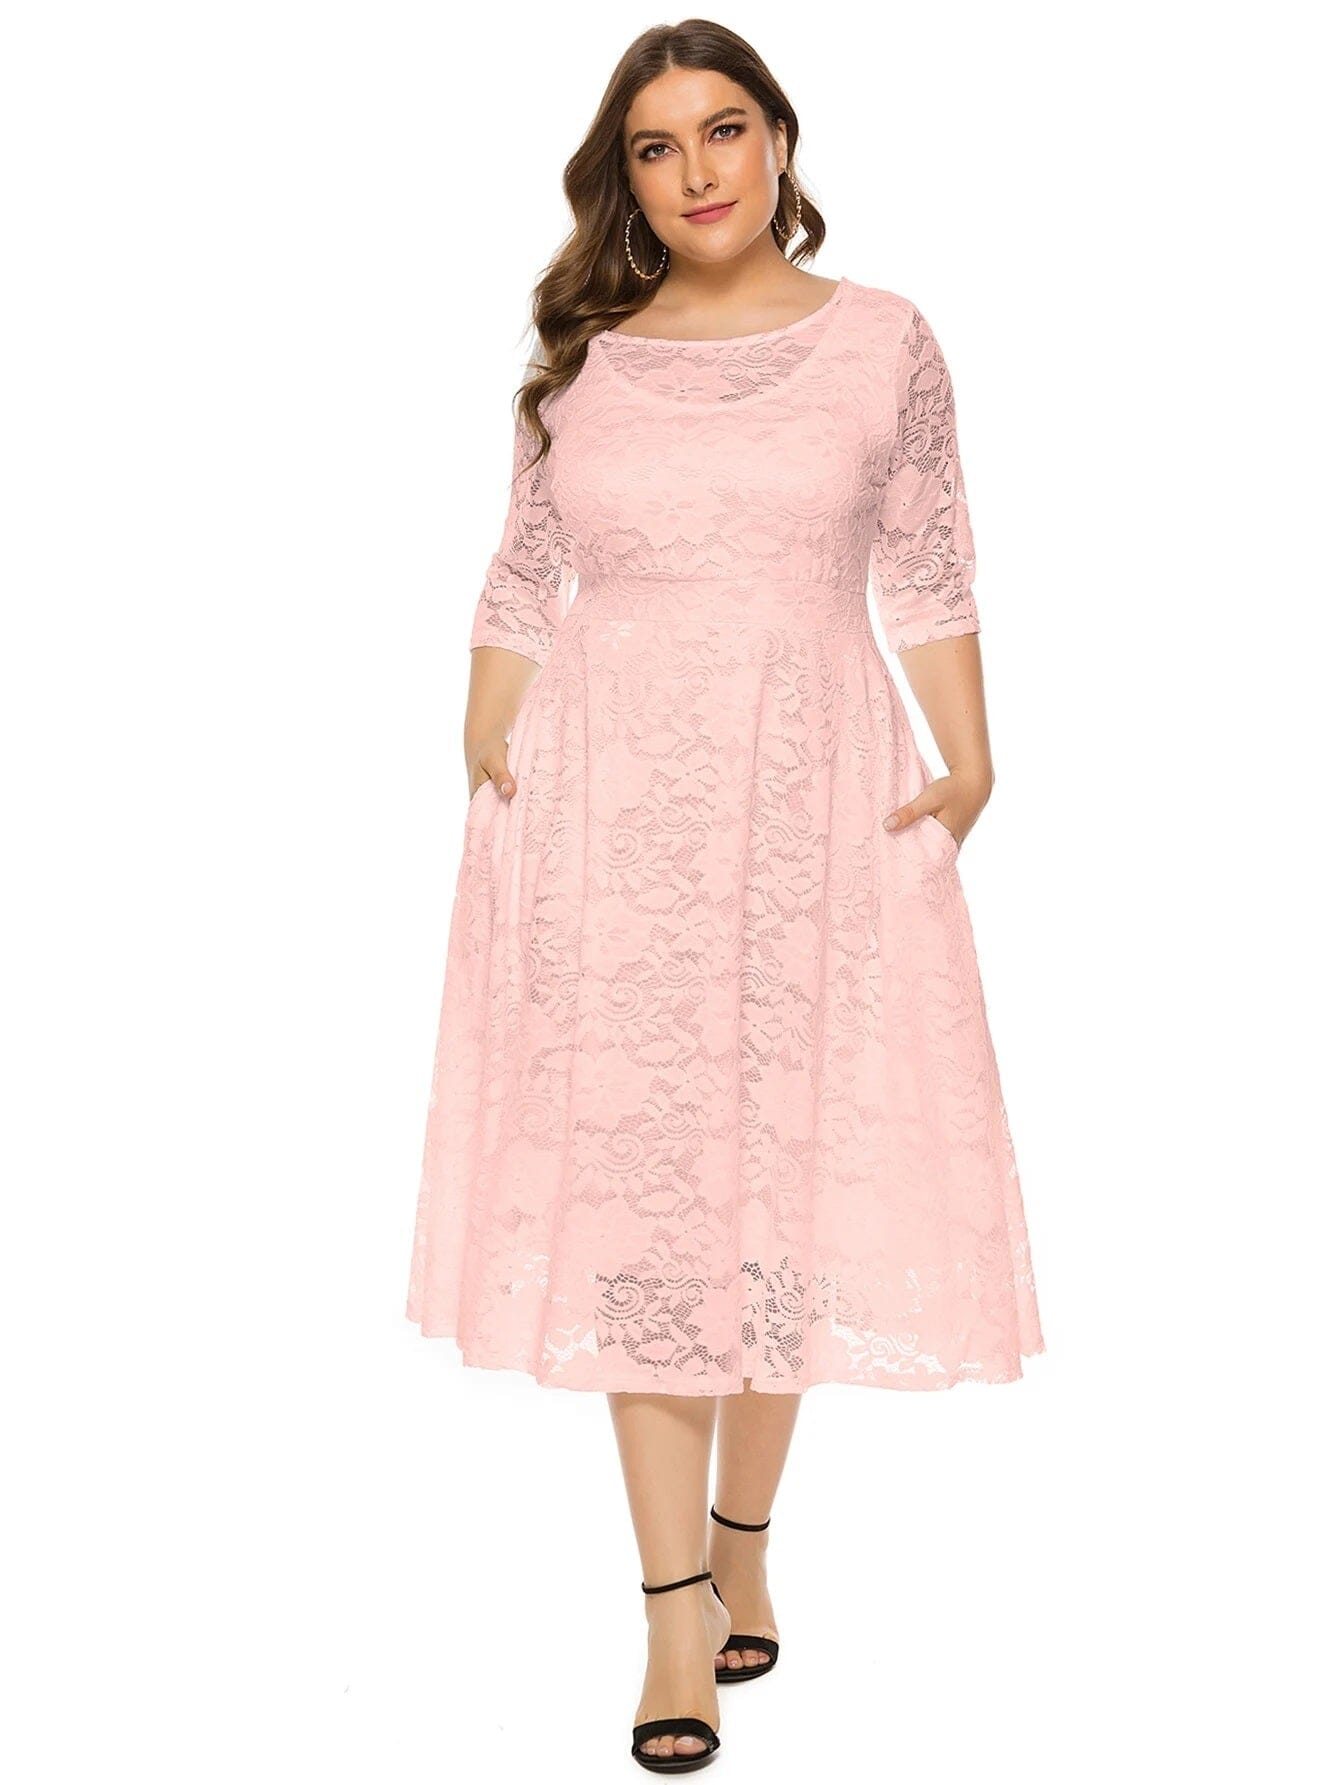 Women Plus Size Vintage Lace Swing Party Cocktail Wedding Midi Dress with pocket Dresses jehouze Pink XL 